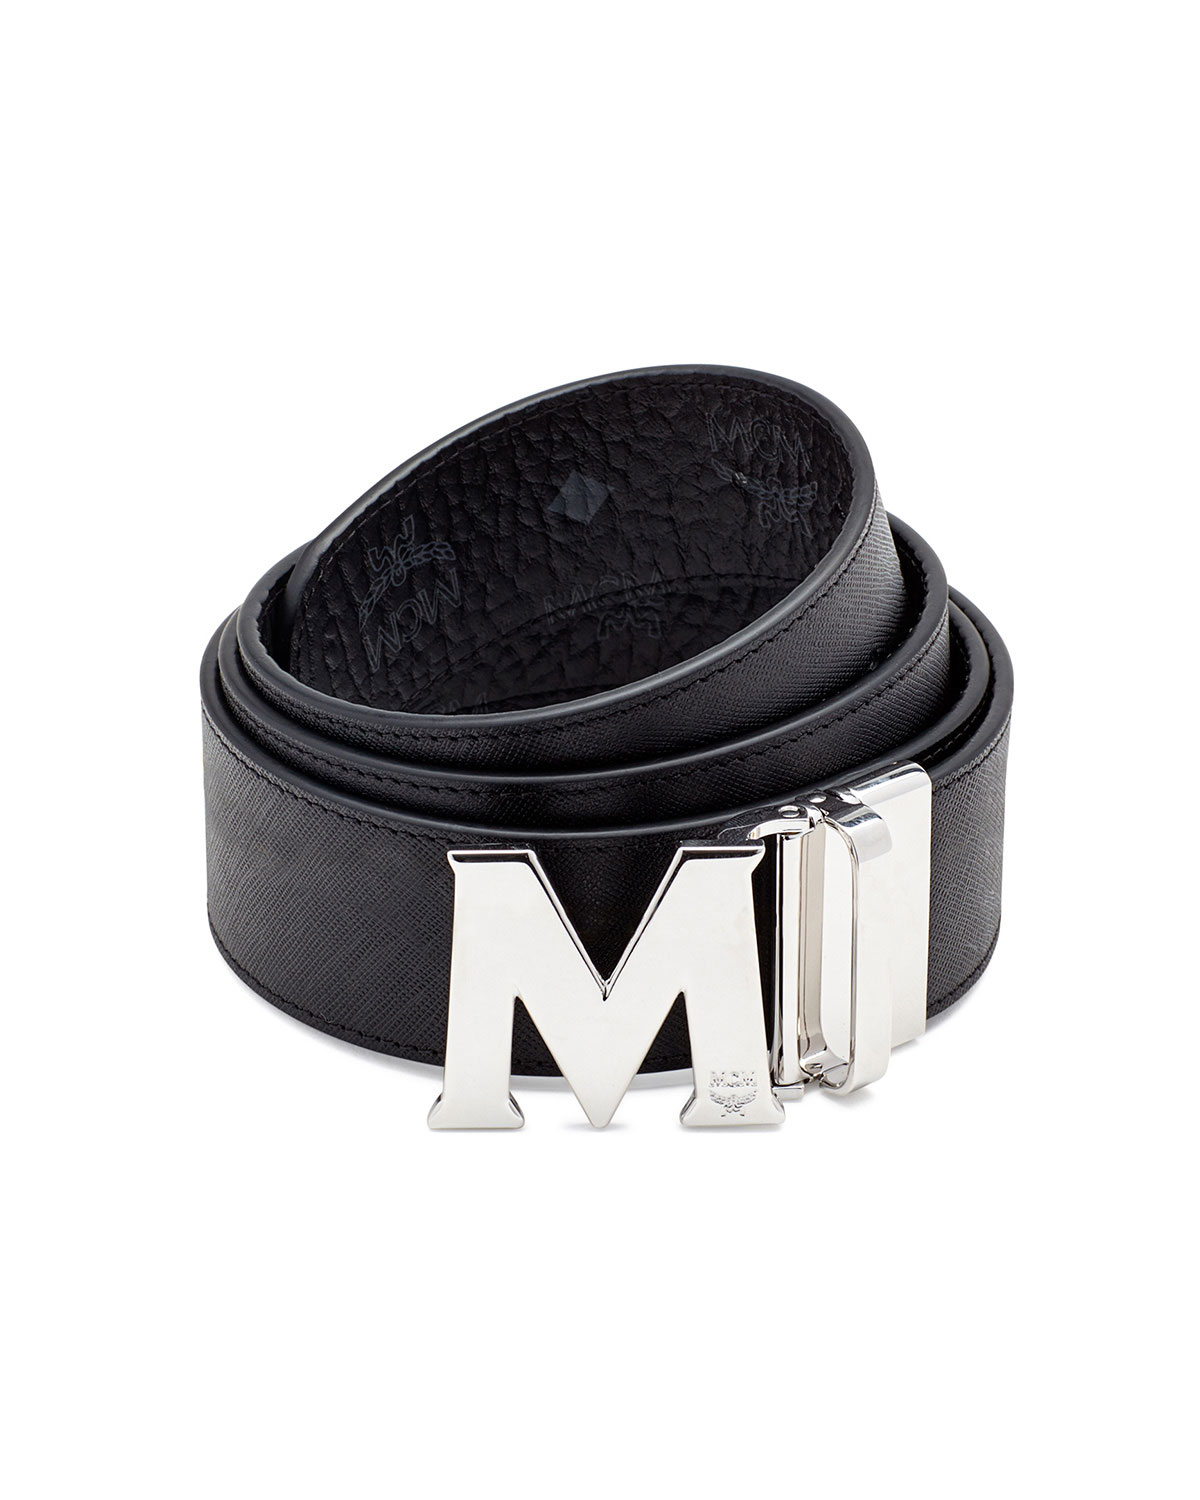 Lyst - Mcm Visetos Reversible Leather Belt in Black for Men